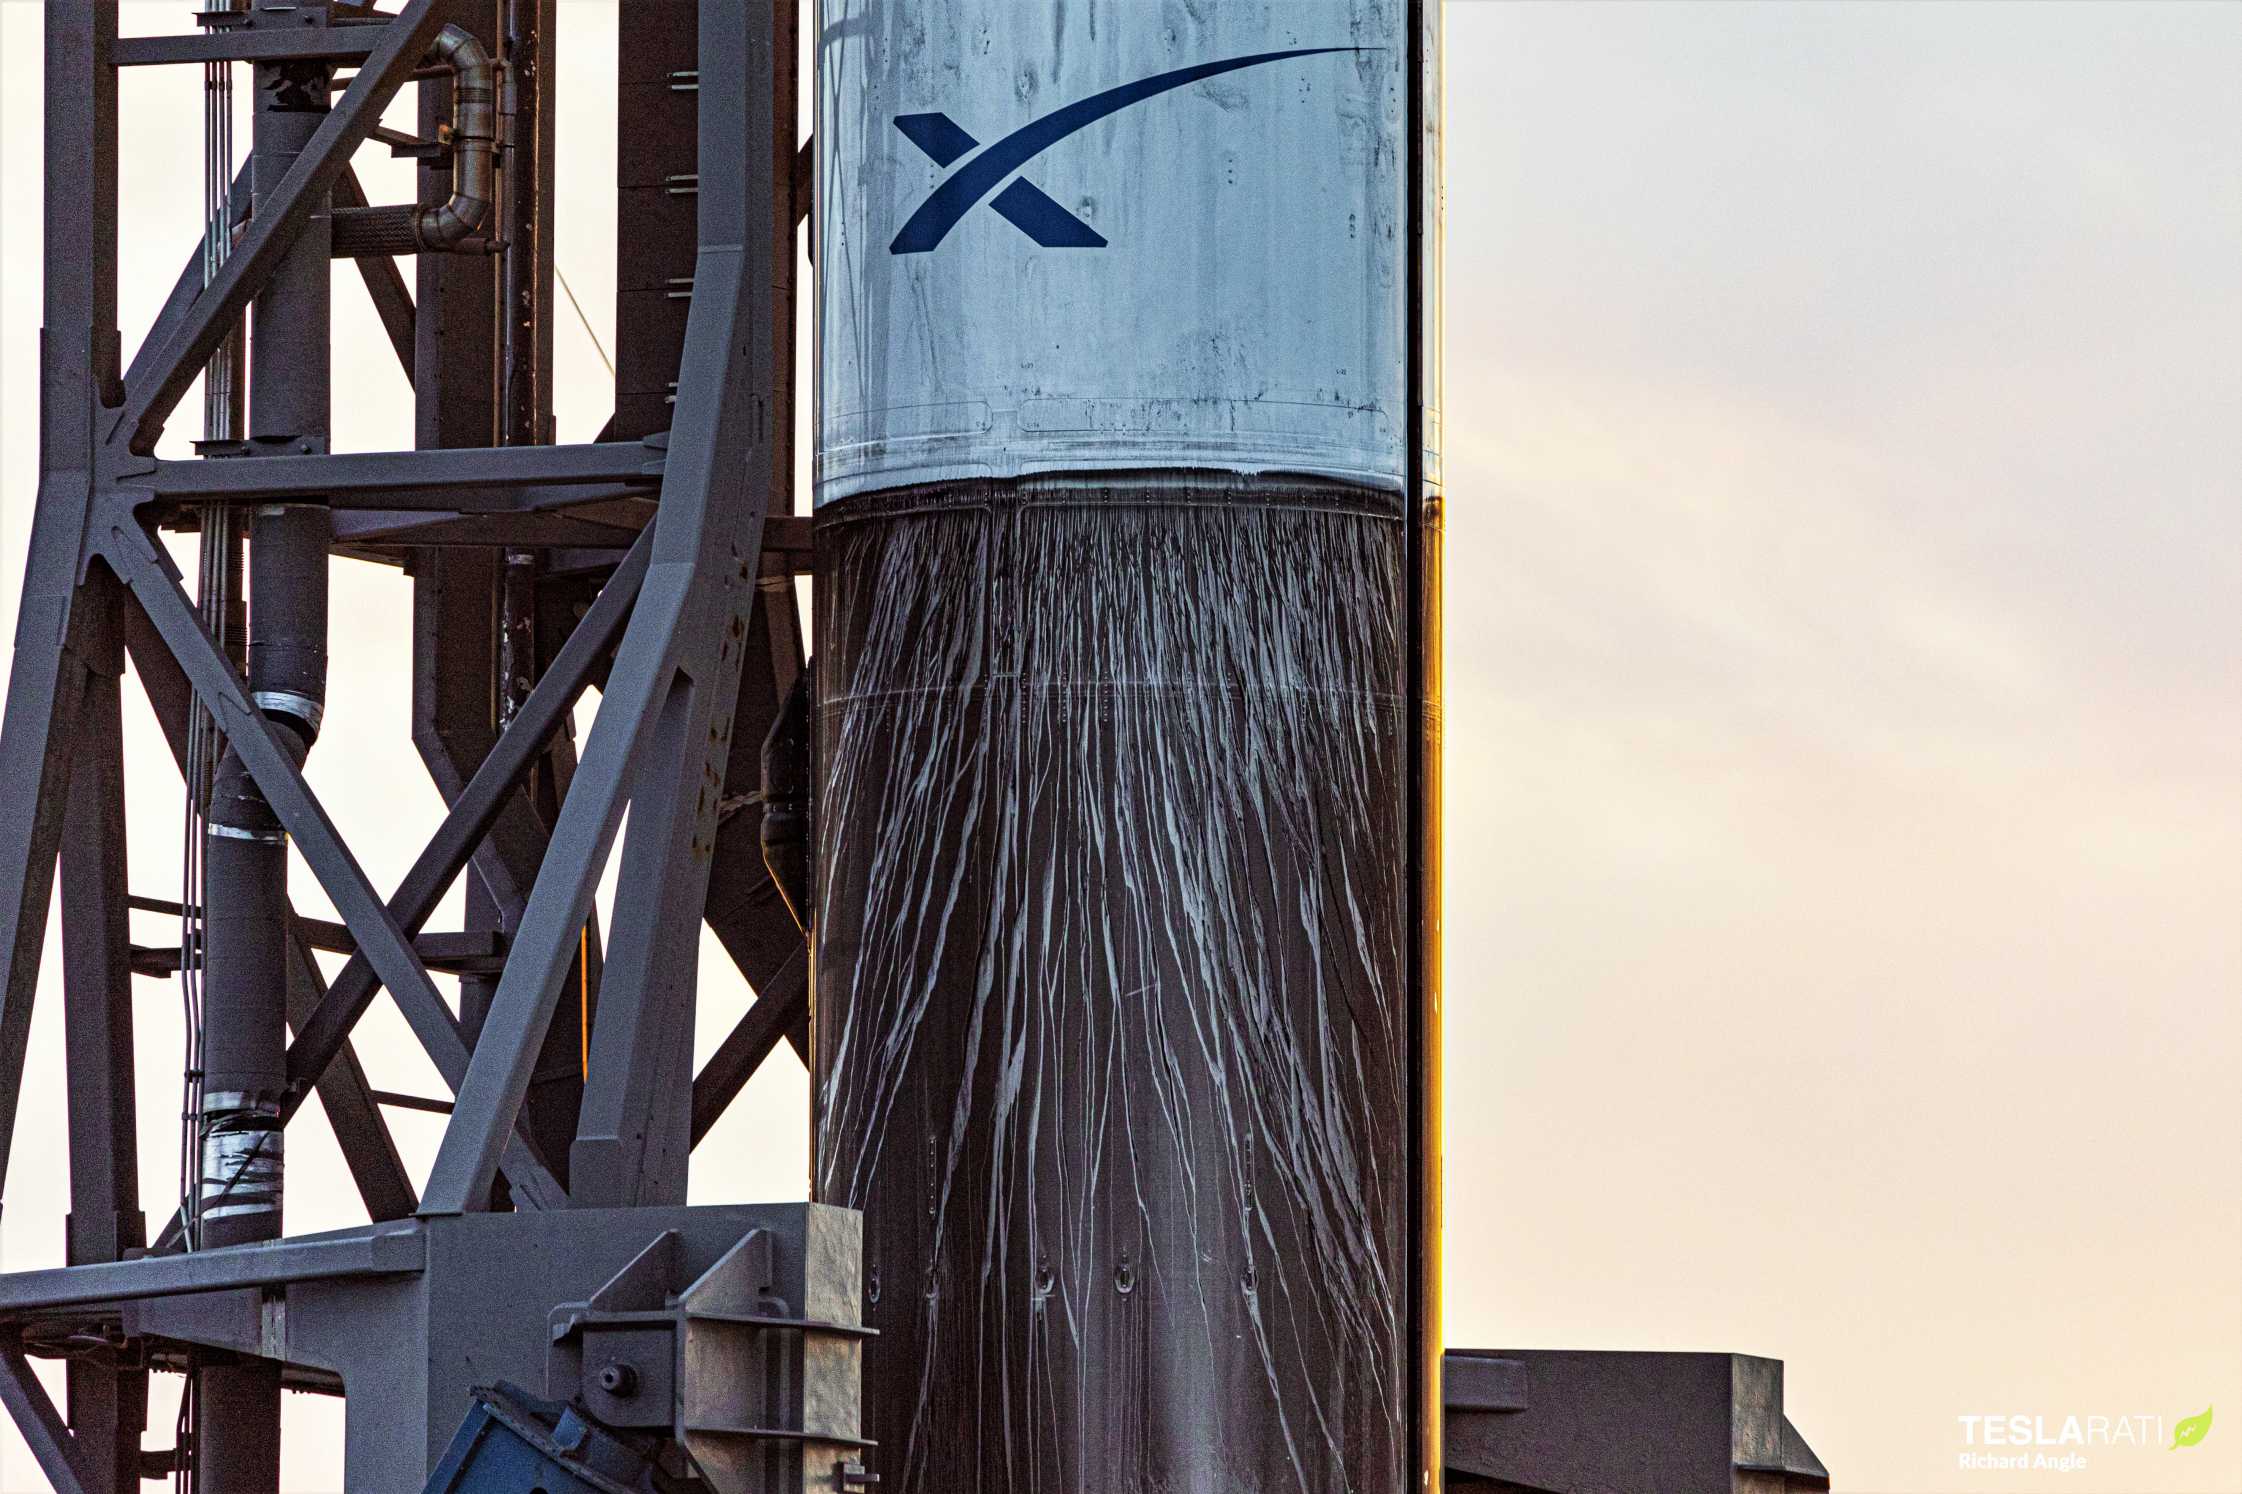 CRS-20 Dragon C112 Falcon 9 B1059 (Richard Angle) pre launch landing (4) edit (c)